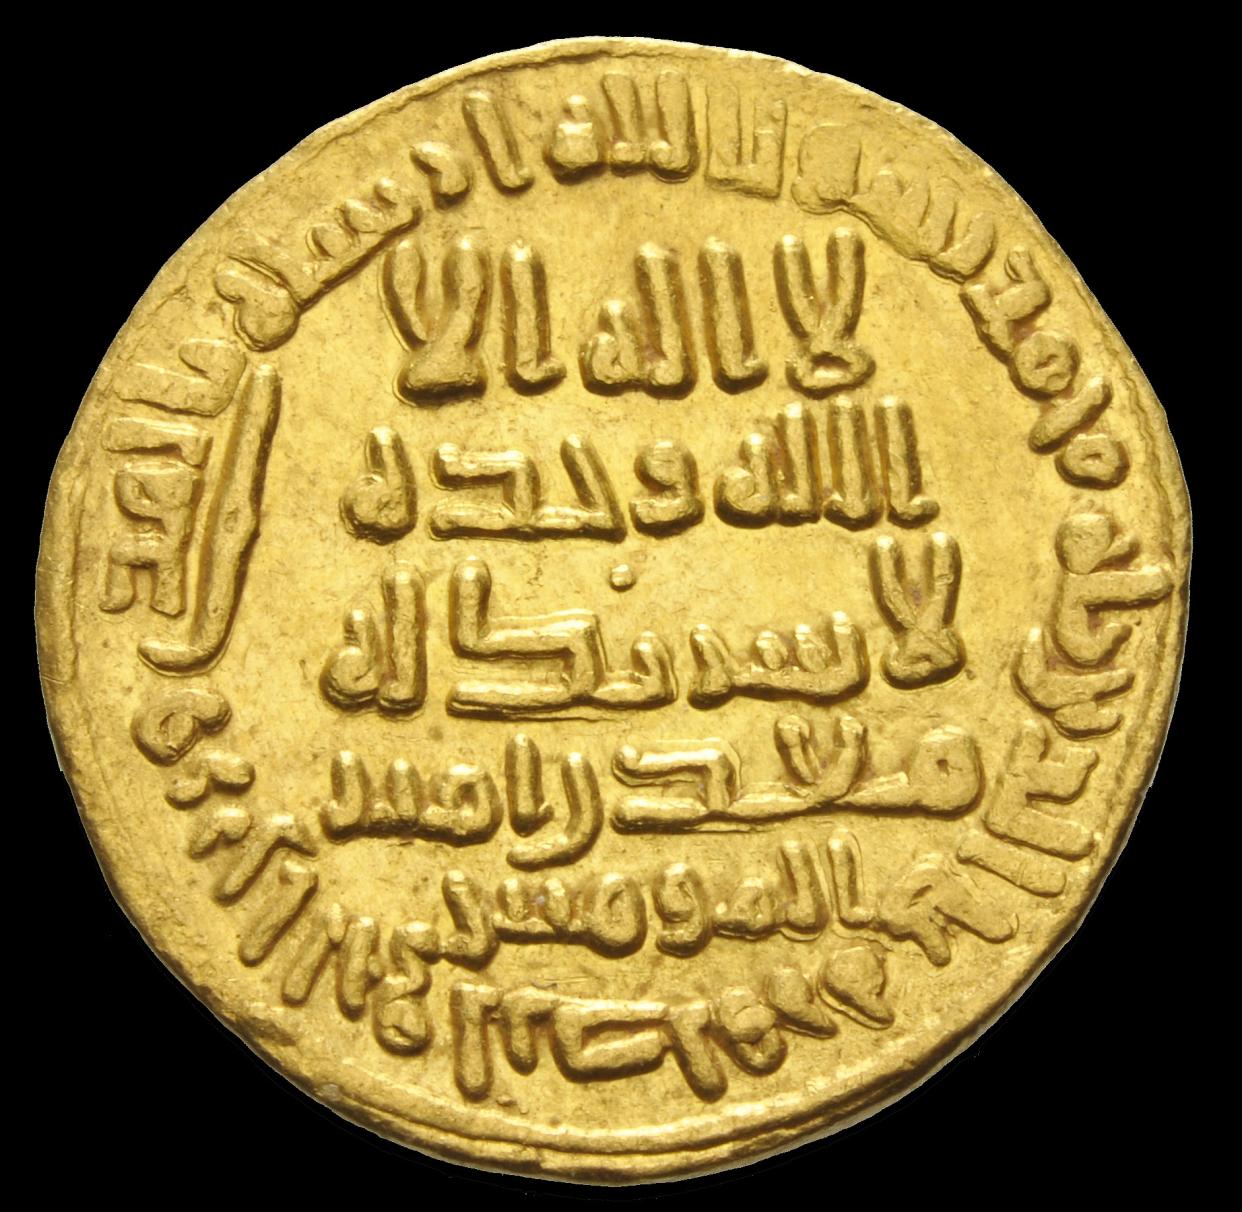 Rare Islamic coin